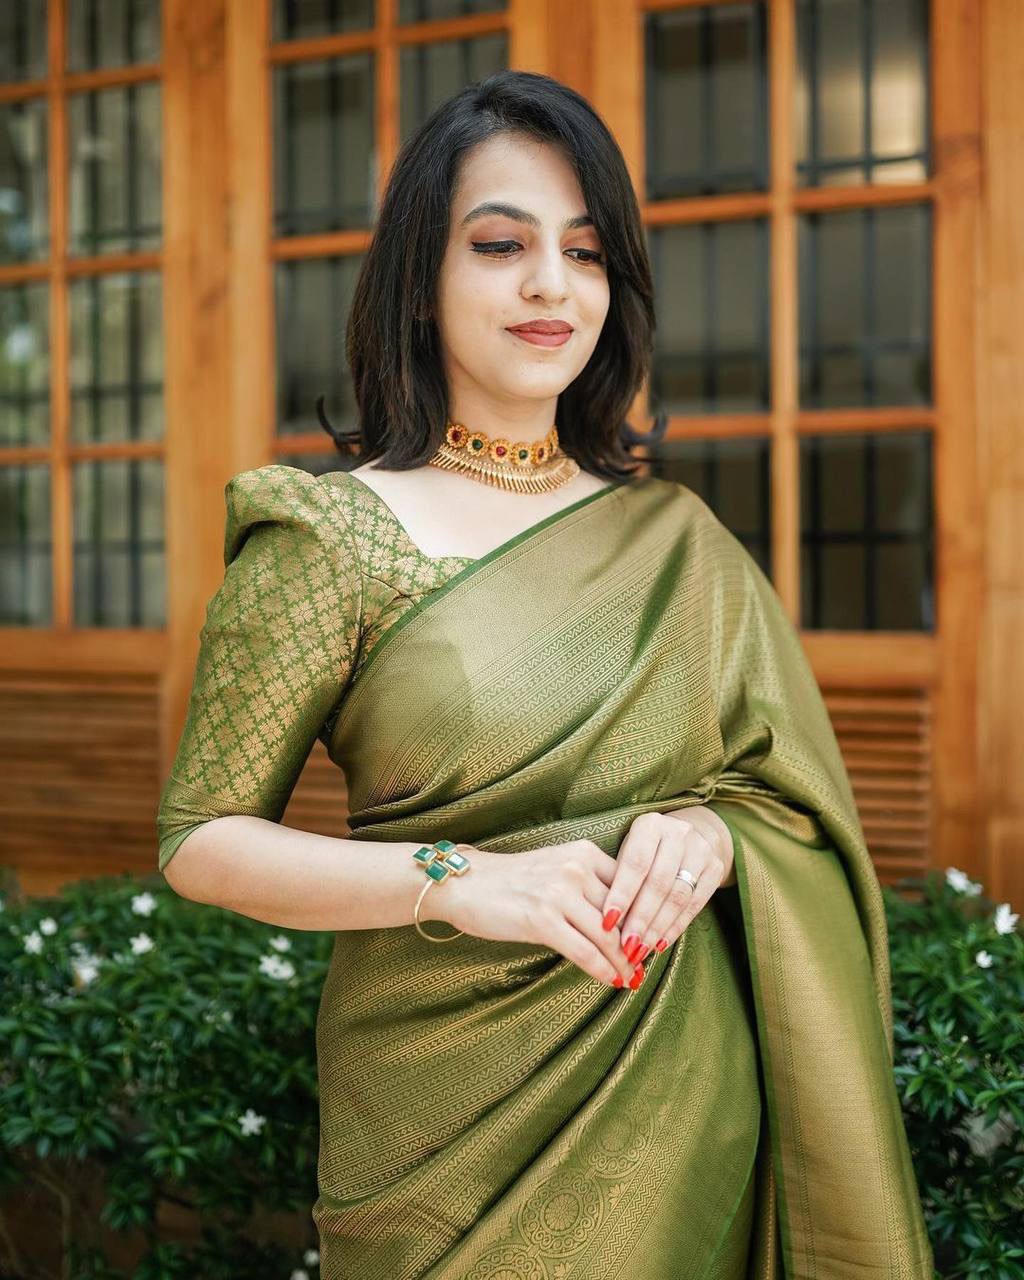 All-Gold Pattu Saree Design For Bride | Indian saree blouses designs,  Maroon blouse, Anarkali dress